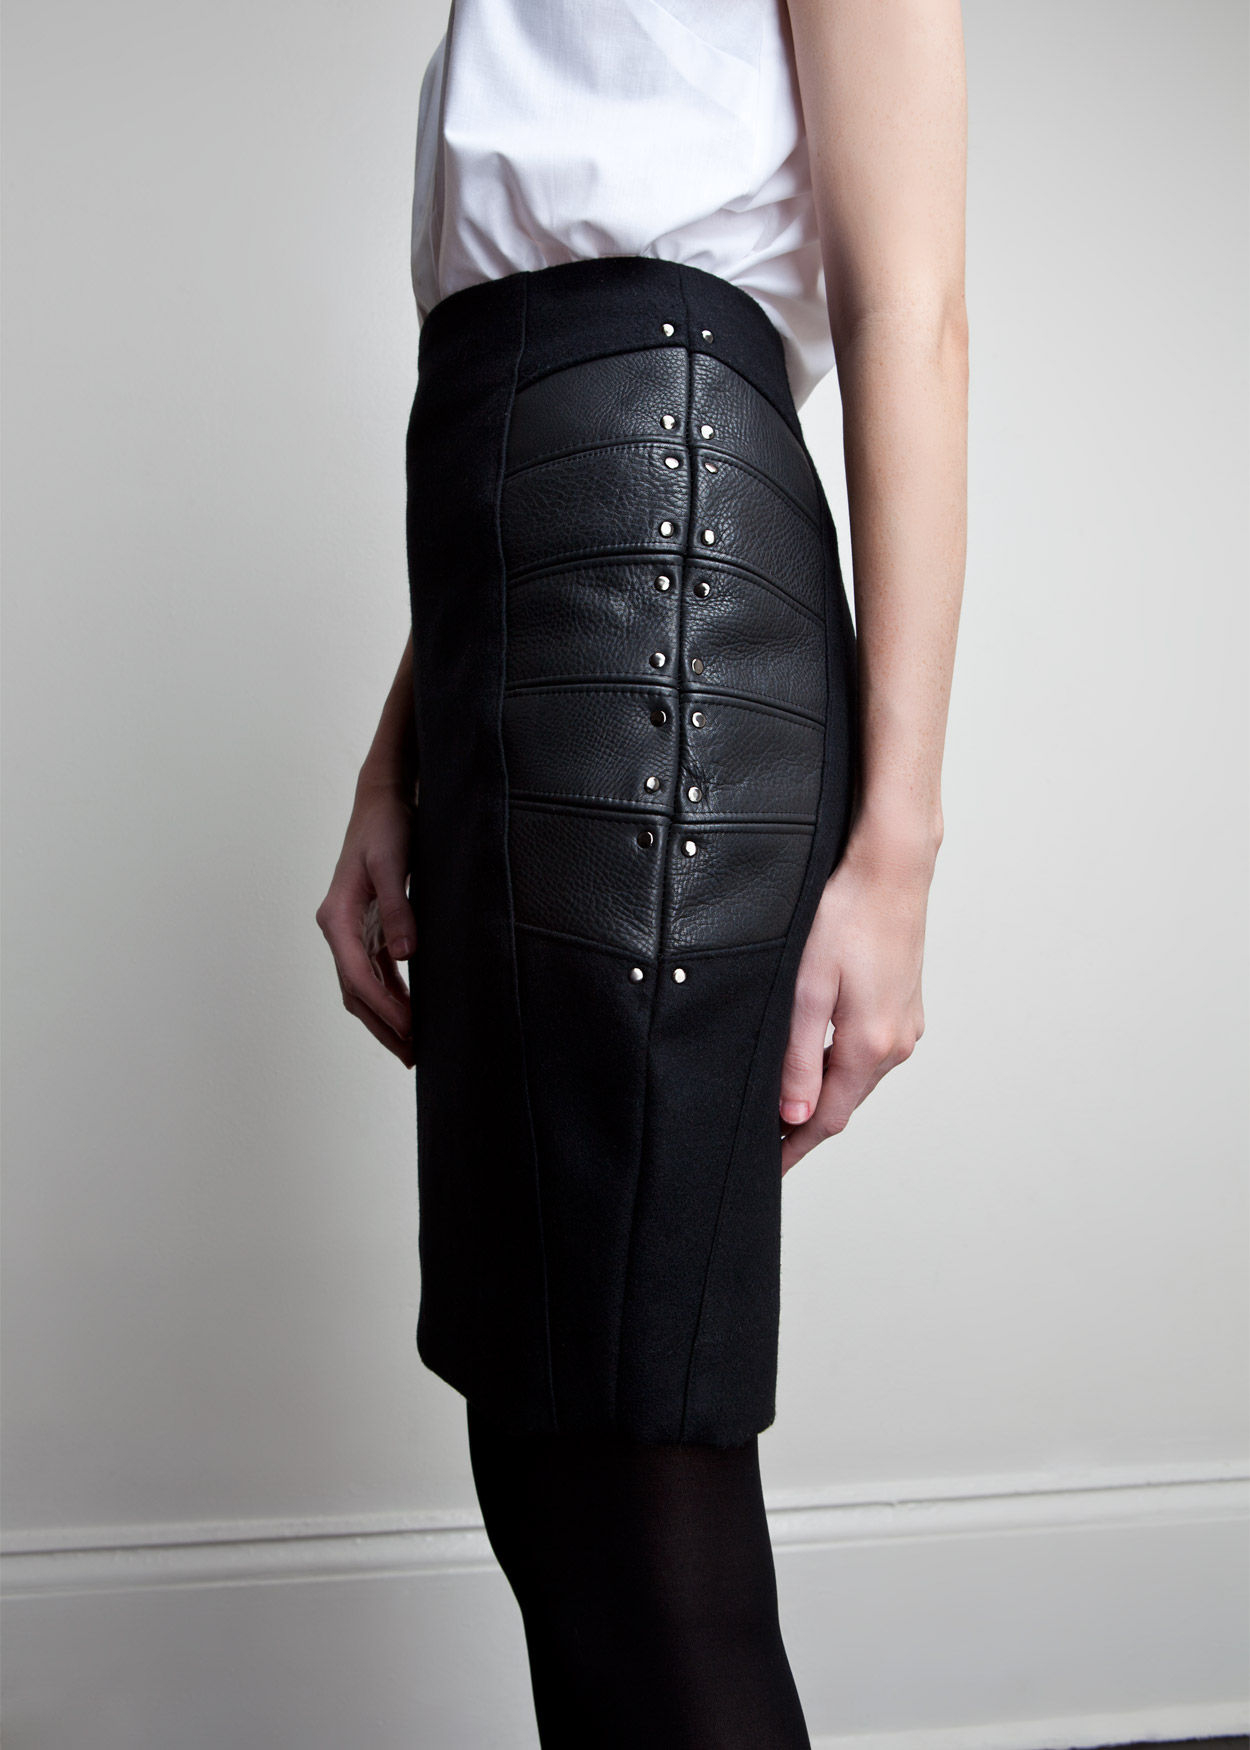 Amanda deleon Wool And Leather Rivet Skirt in Black | Lyst